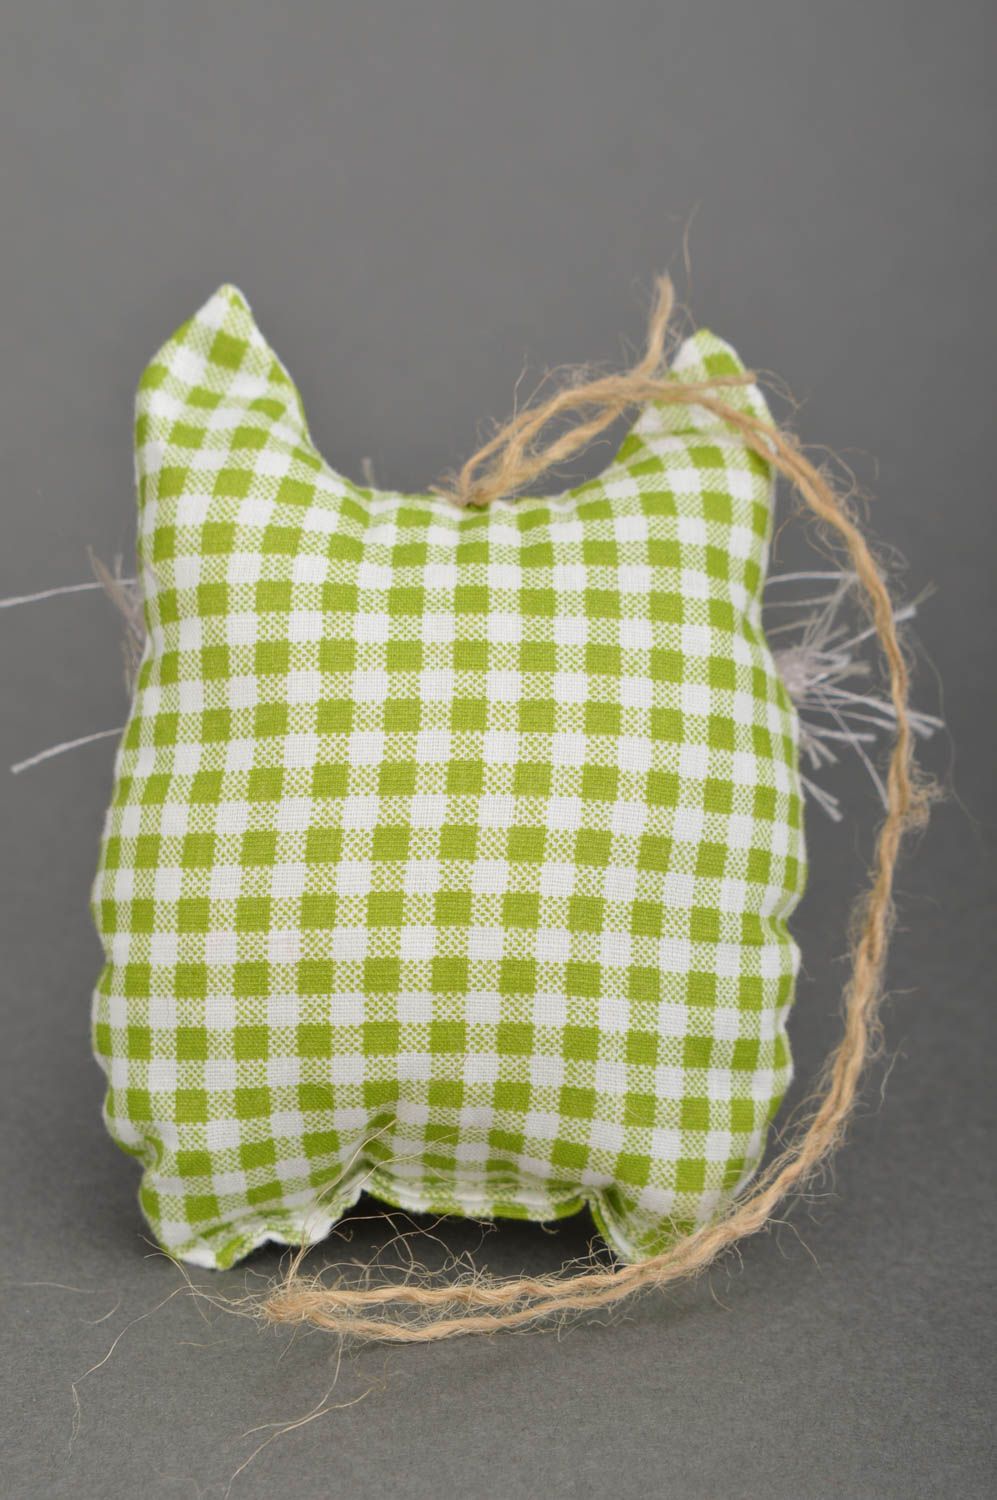 Handmade soft toy designer stuffed toy for children nursery decor ideas owl toy photo 3